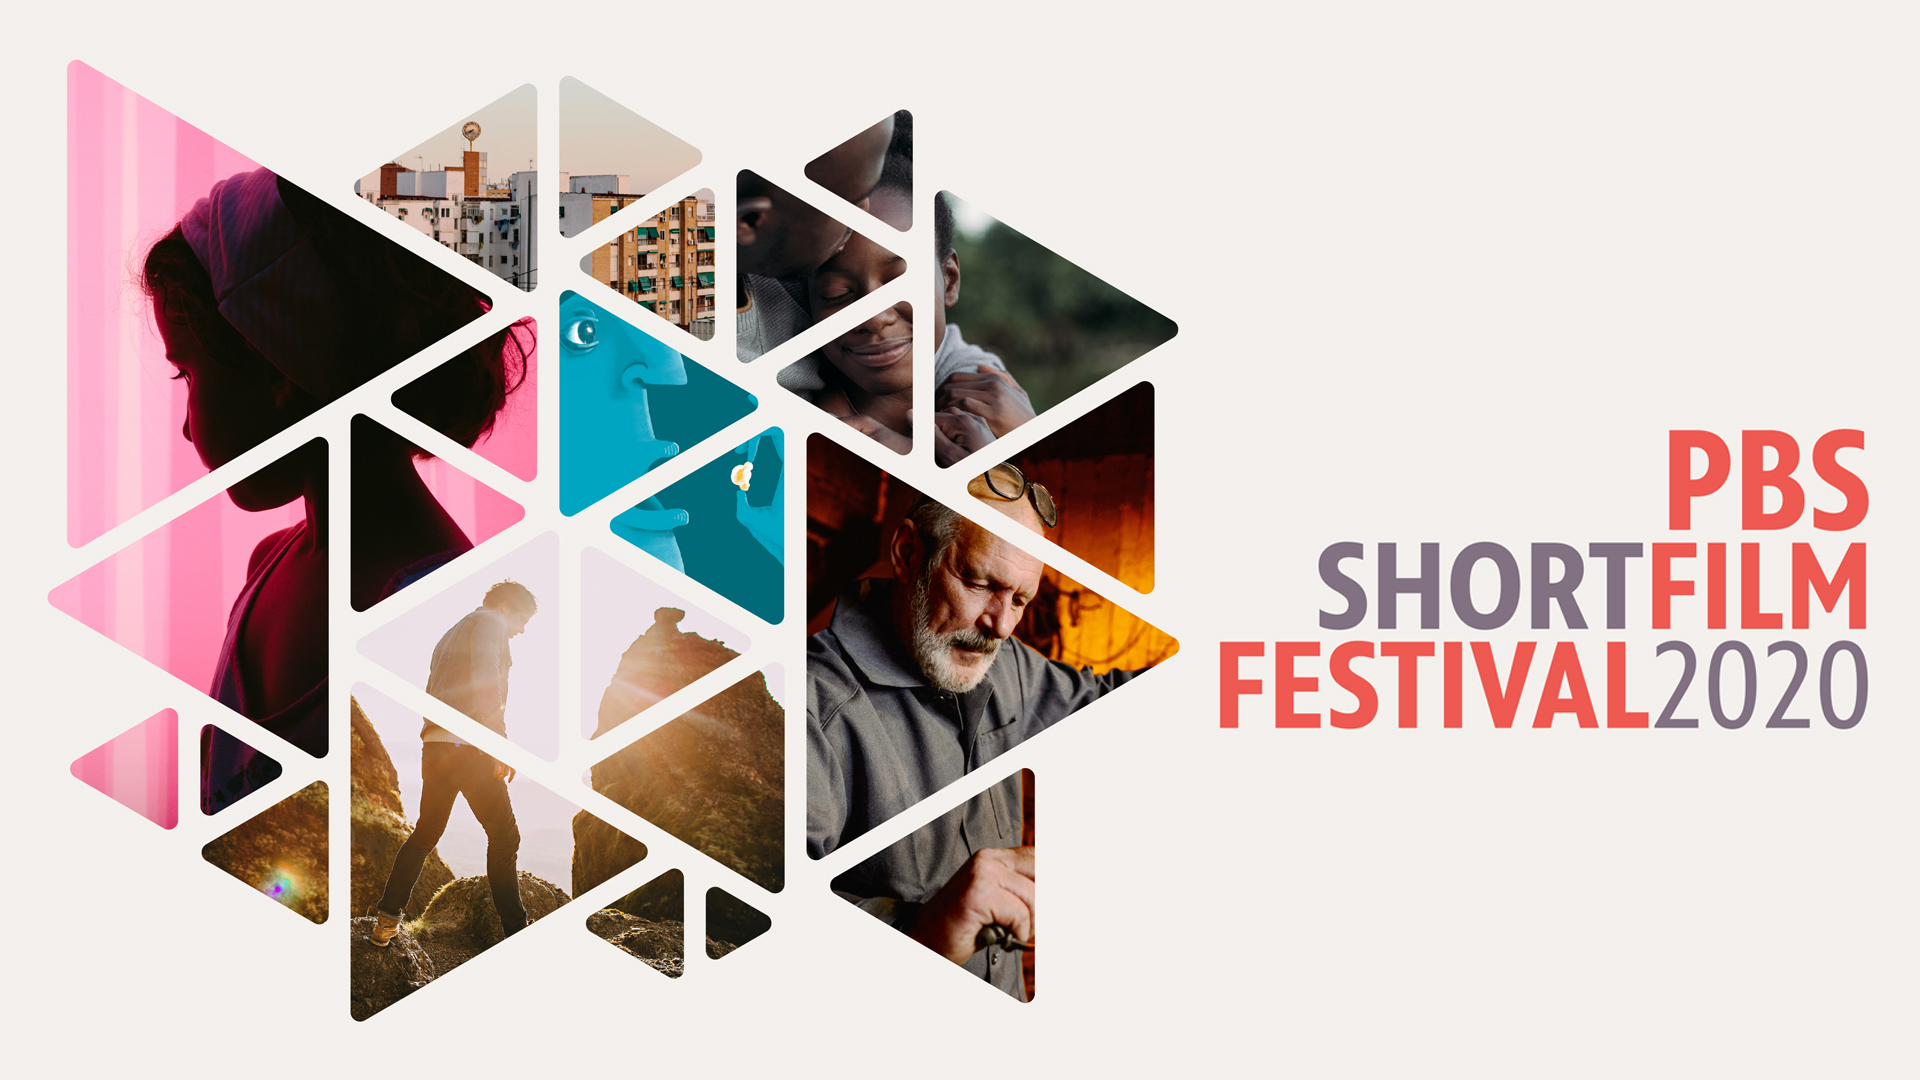 PBS Short Film Festival 2020